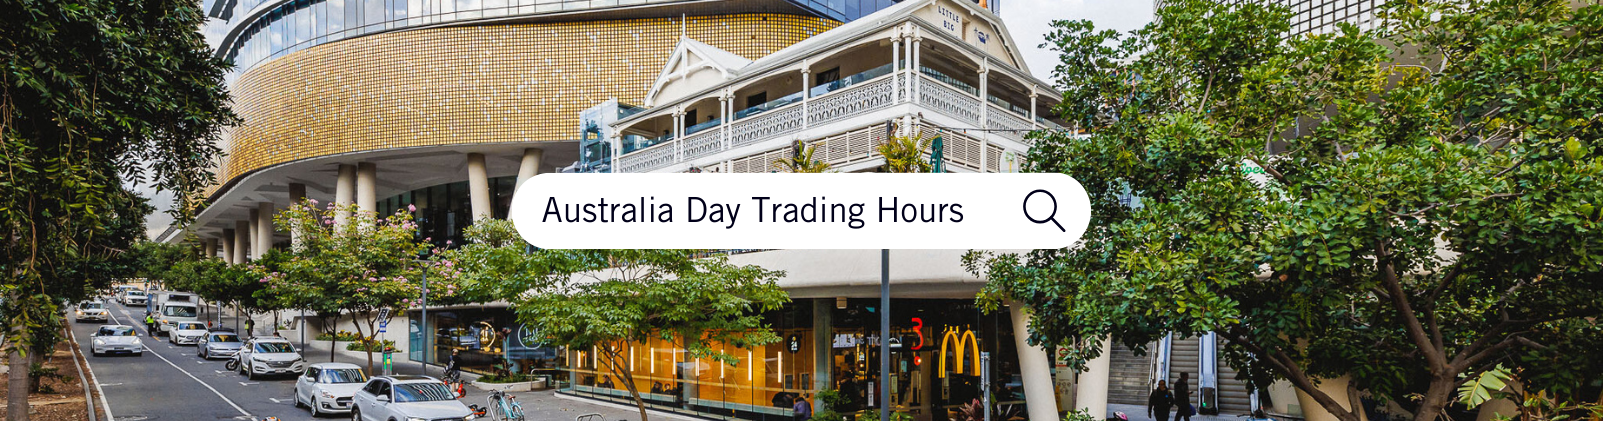 SP - BTM - Australia Trading Hours Web Banner 1603 x 421 px 2